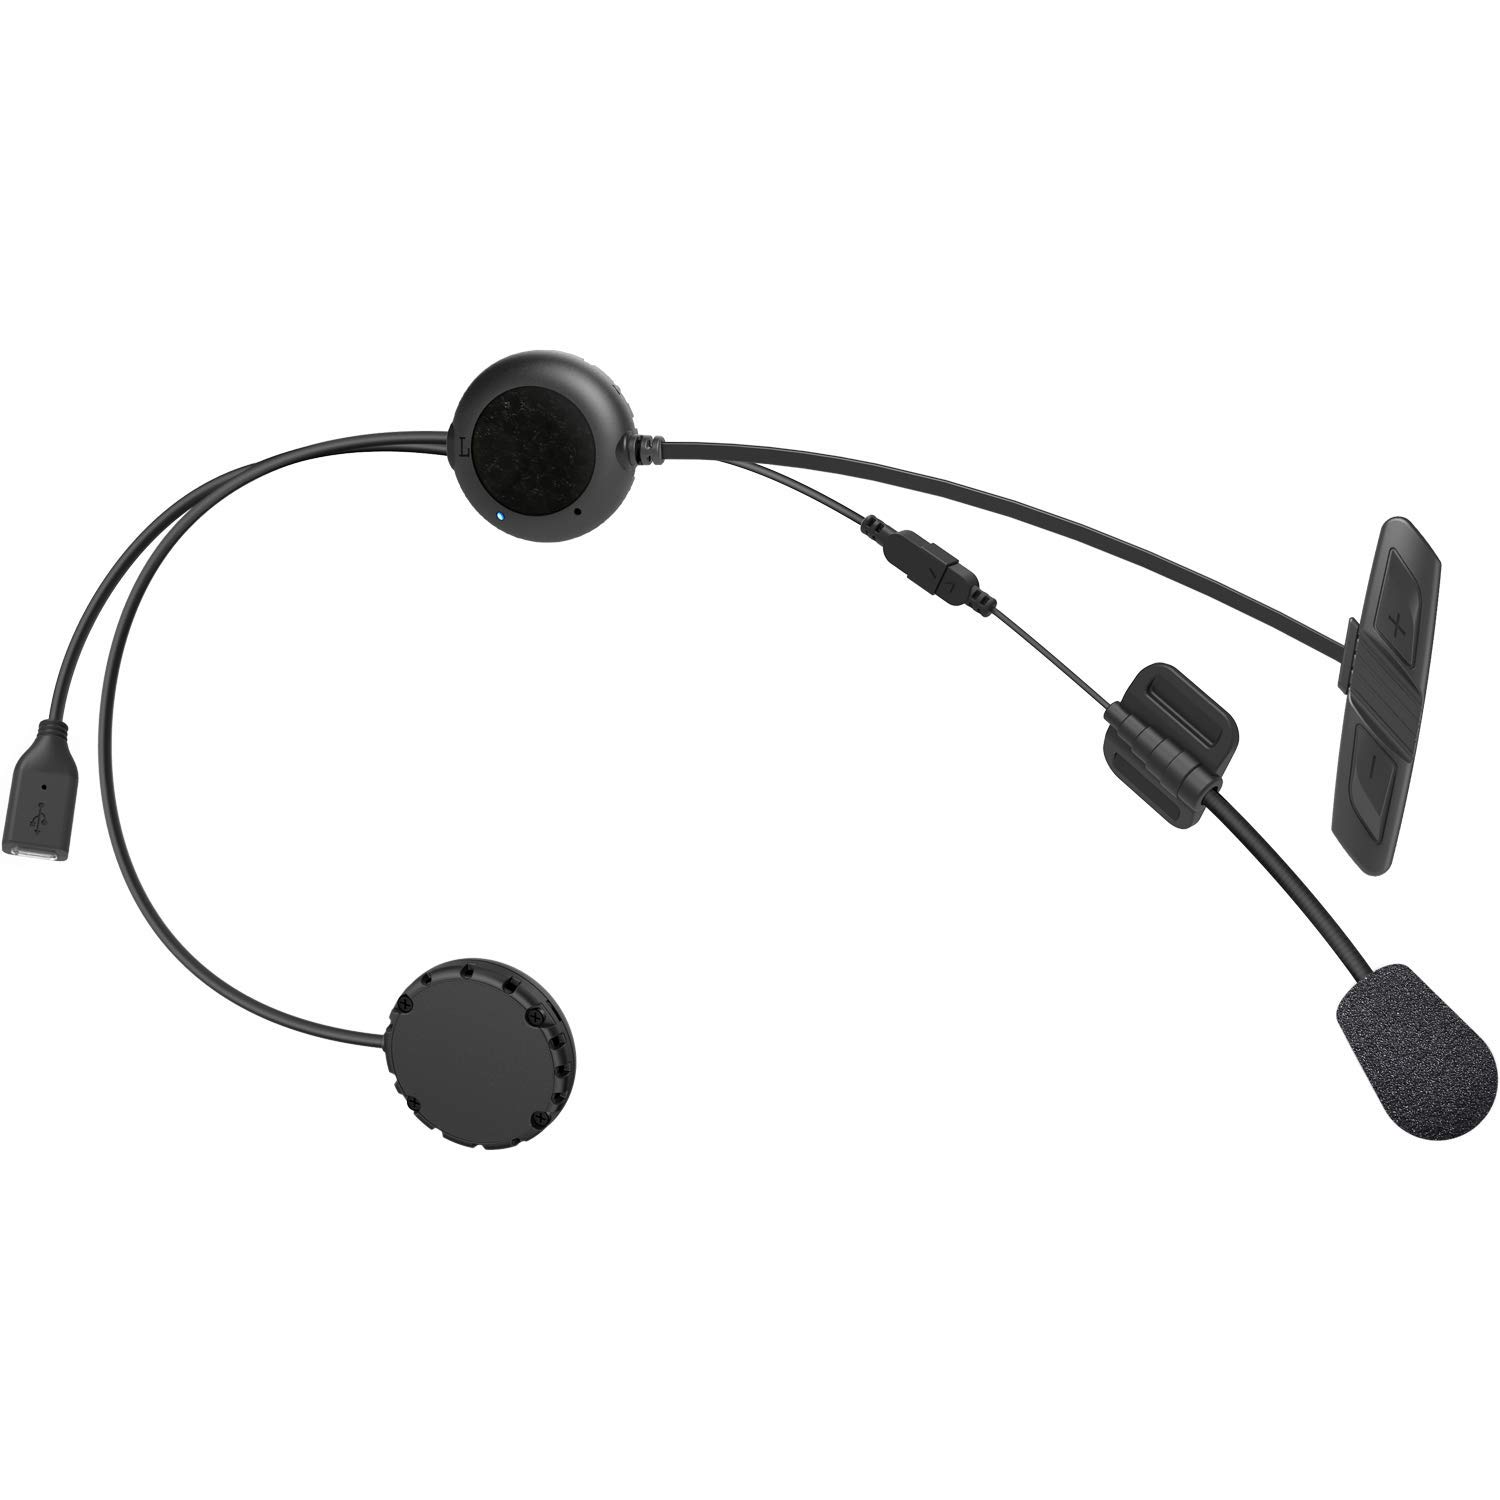 Sena 3S Plus Universal Motorcycle Bluetooth Headset